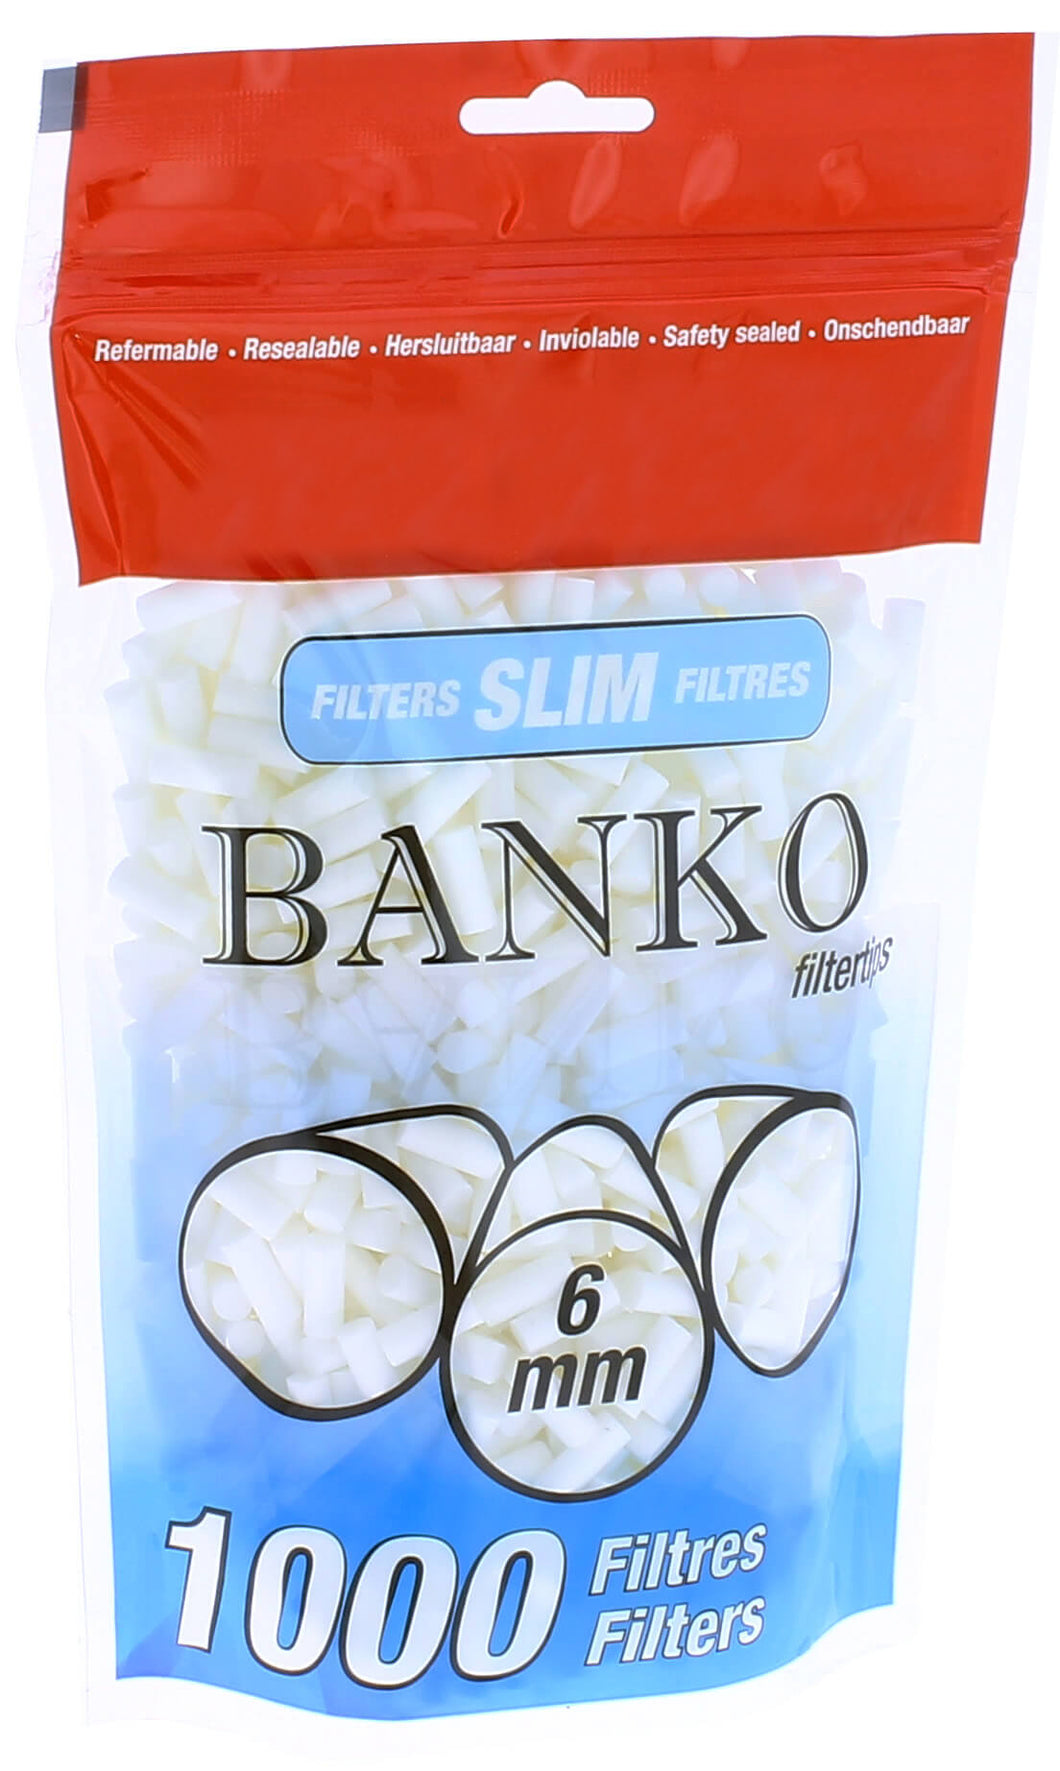 BANKO SLIM FILTER TIPS 6MM (1000)